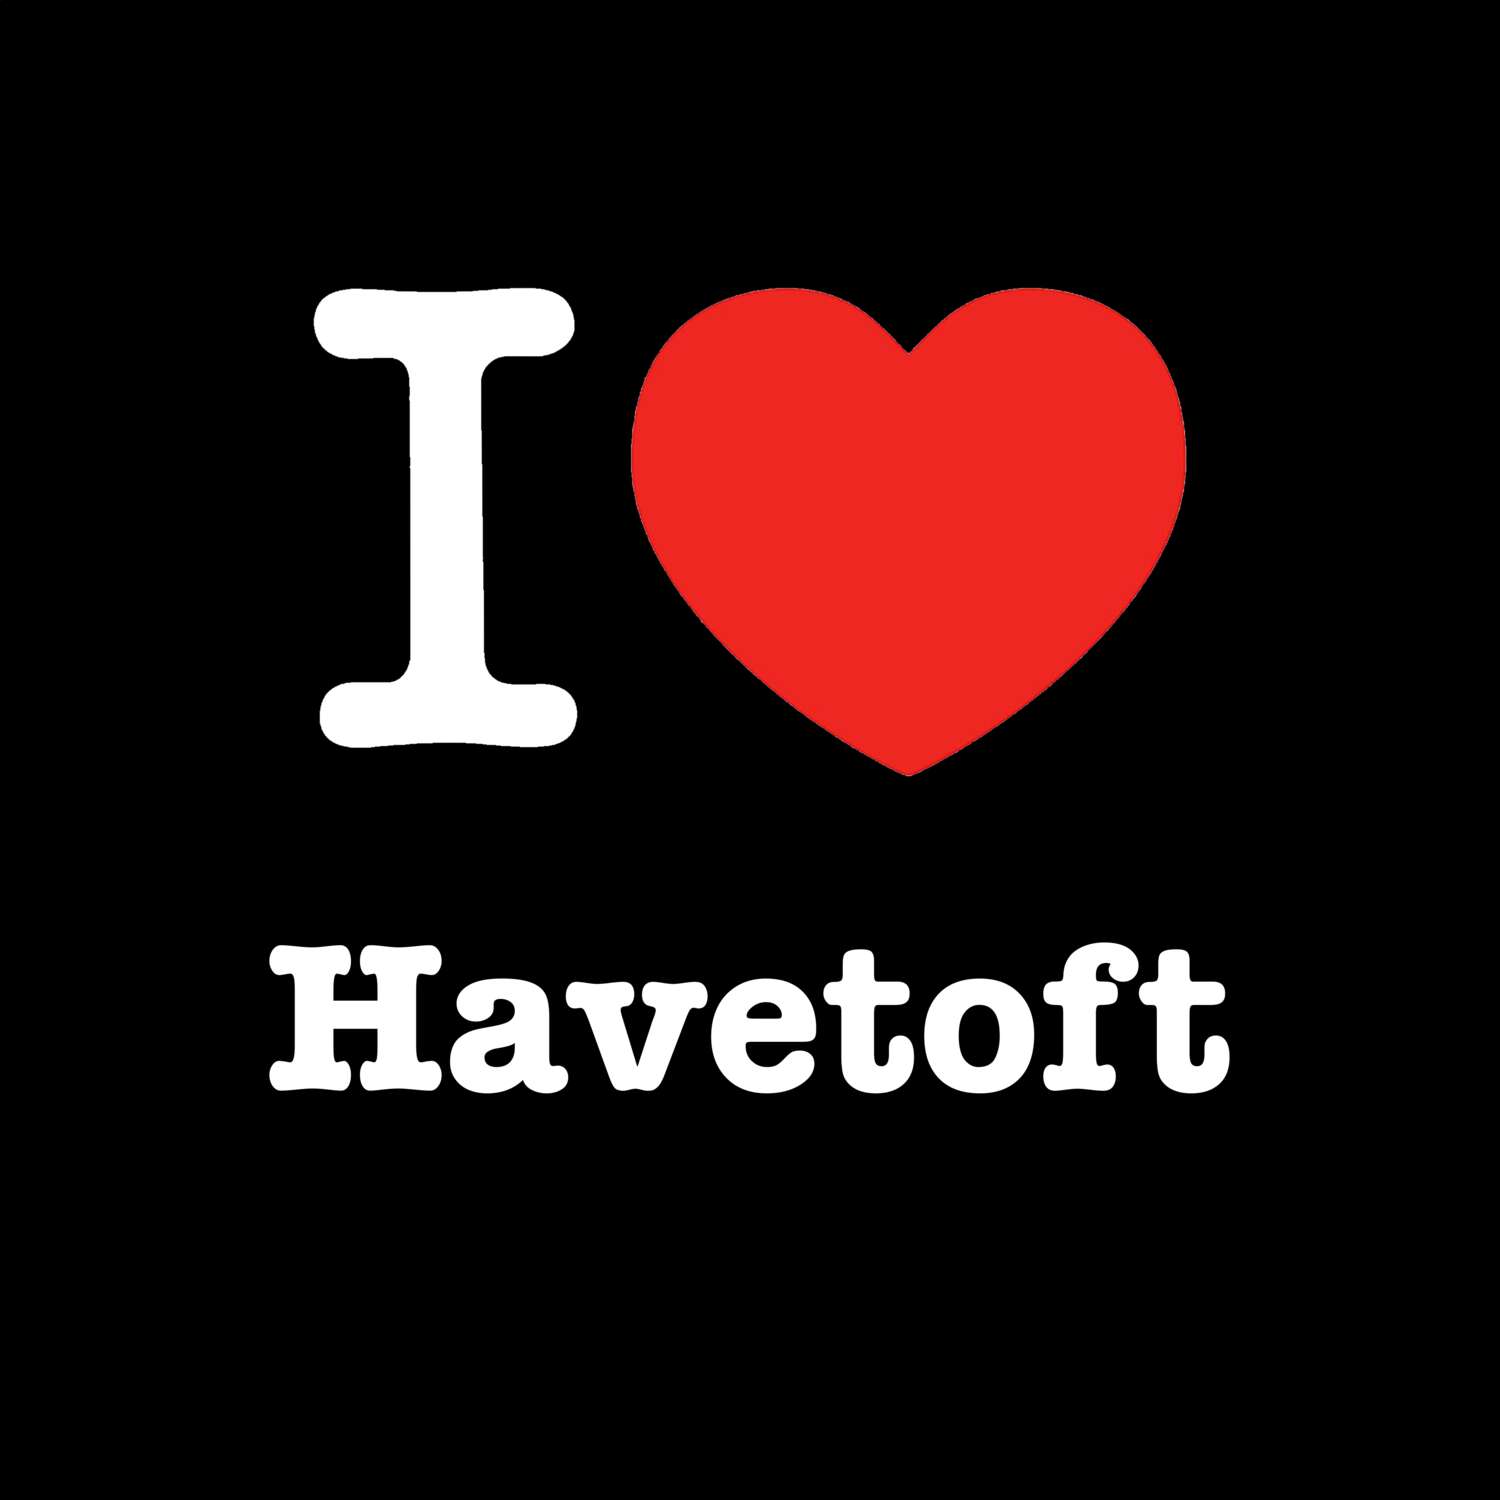 Havetoft T-Shirt »I love«